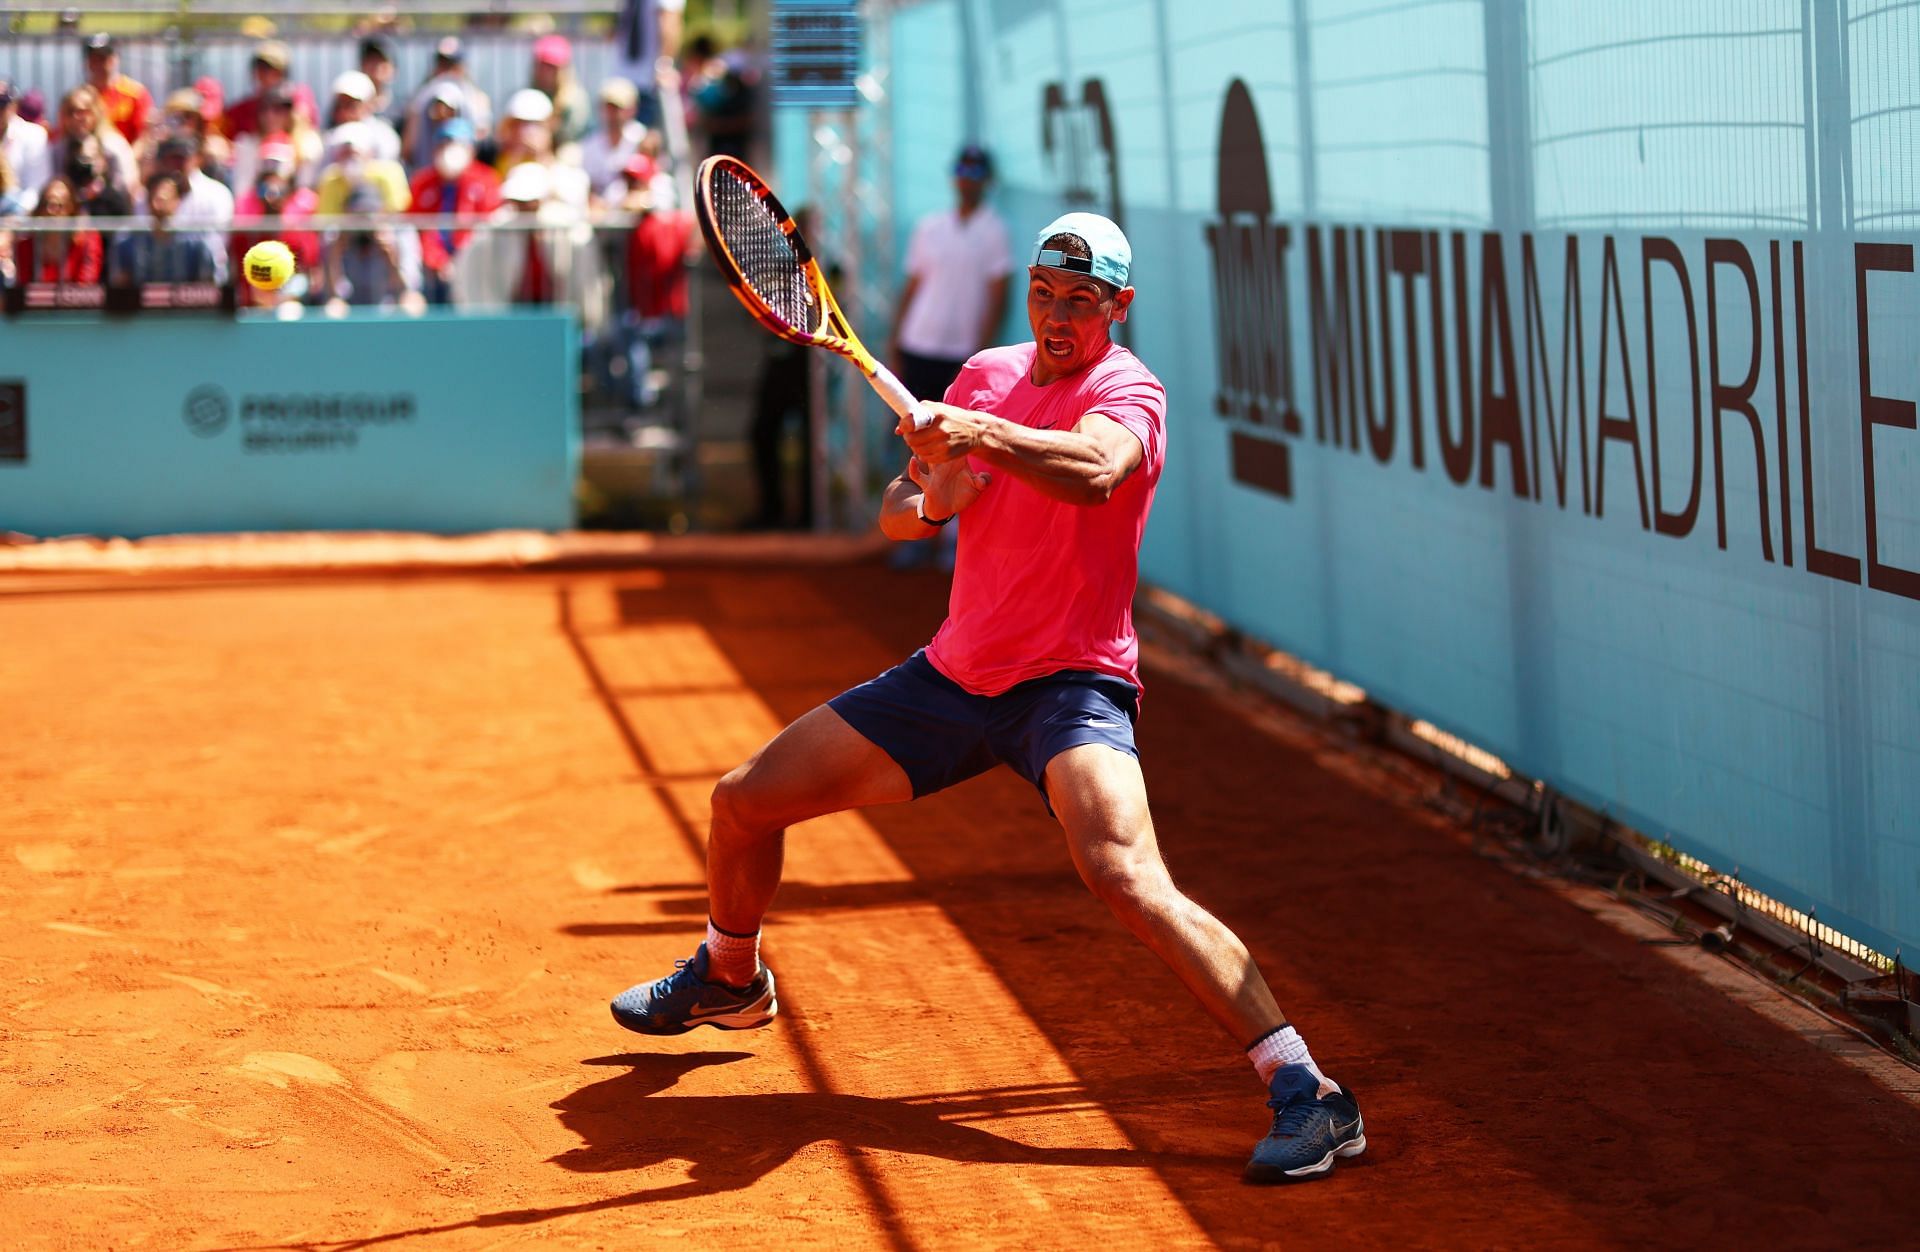 Rafael Nadal practices ahead of the Mutua Madrid Open